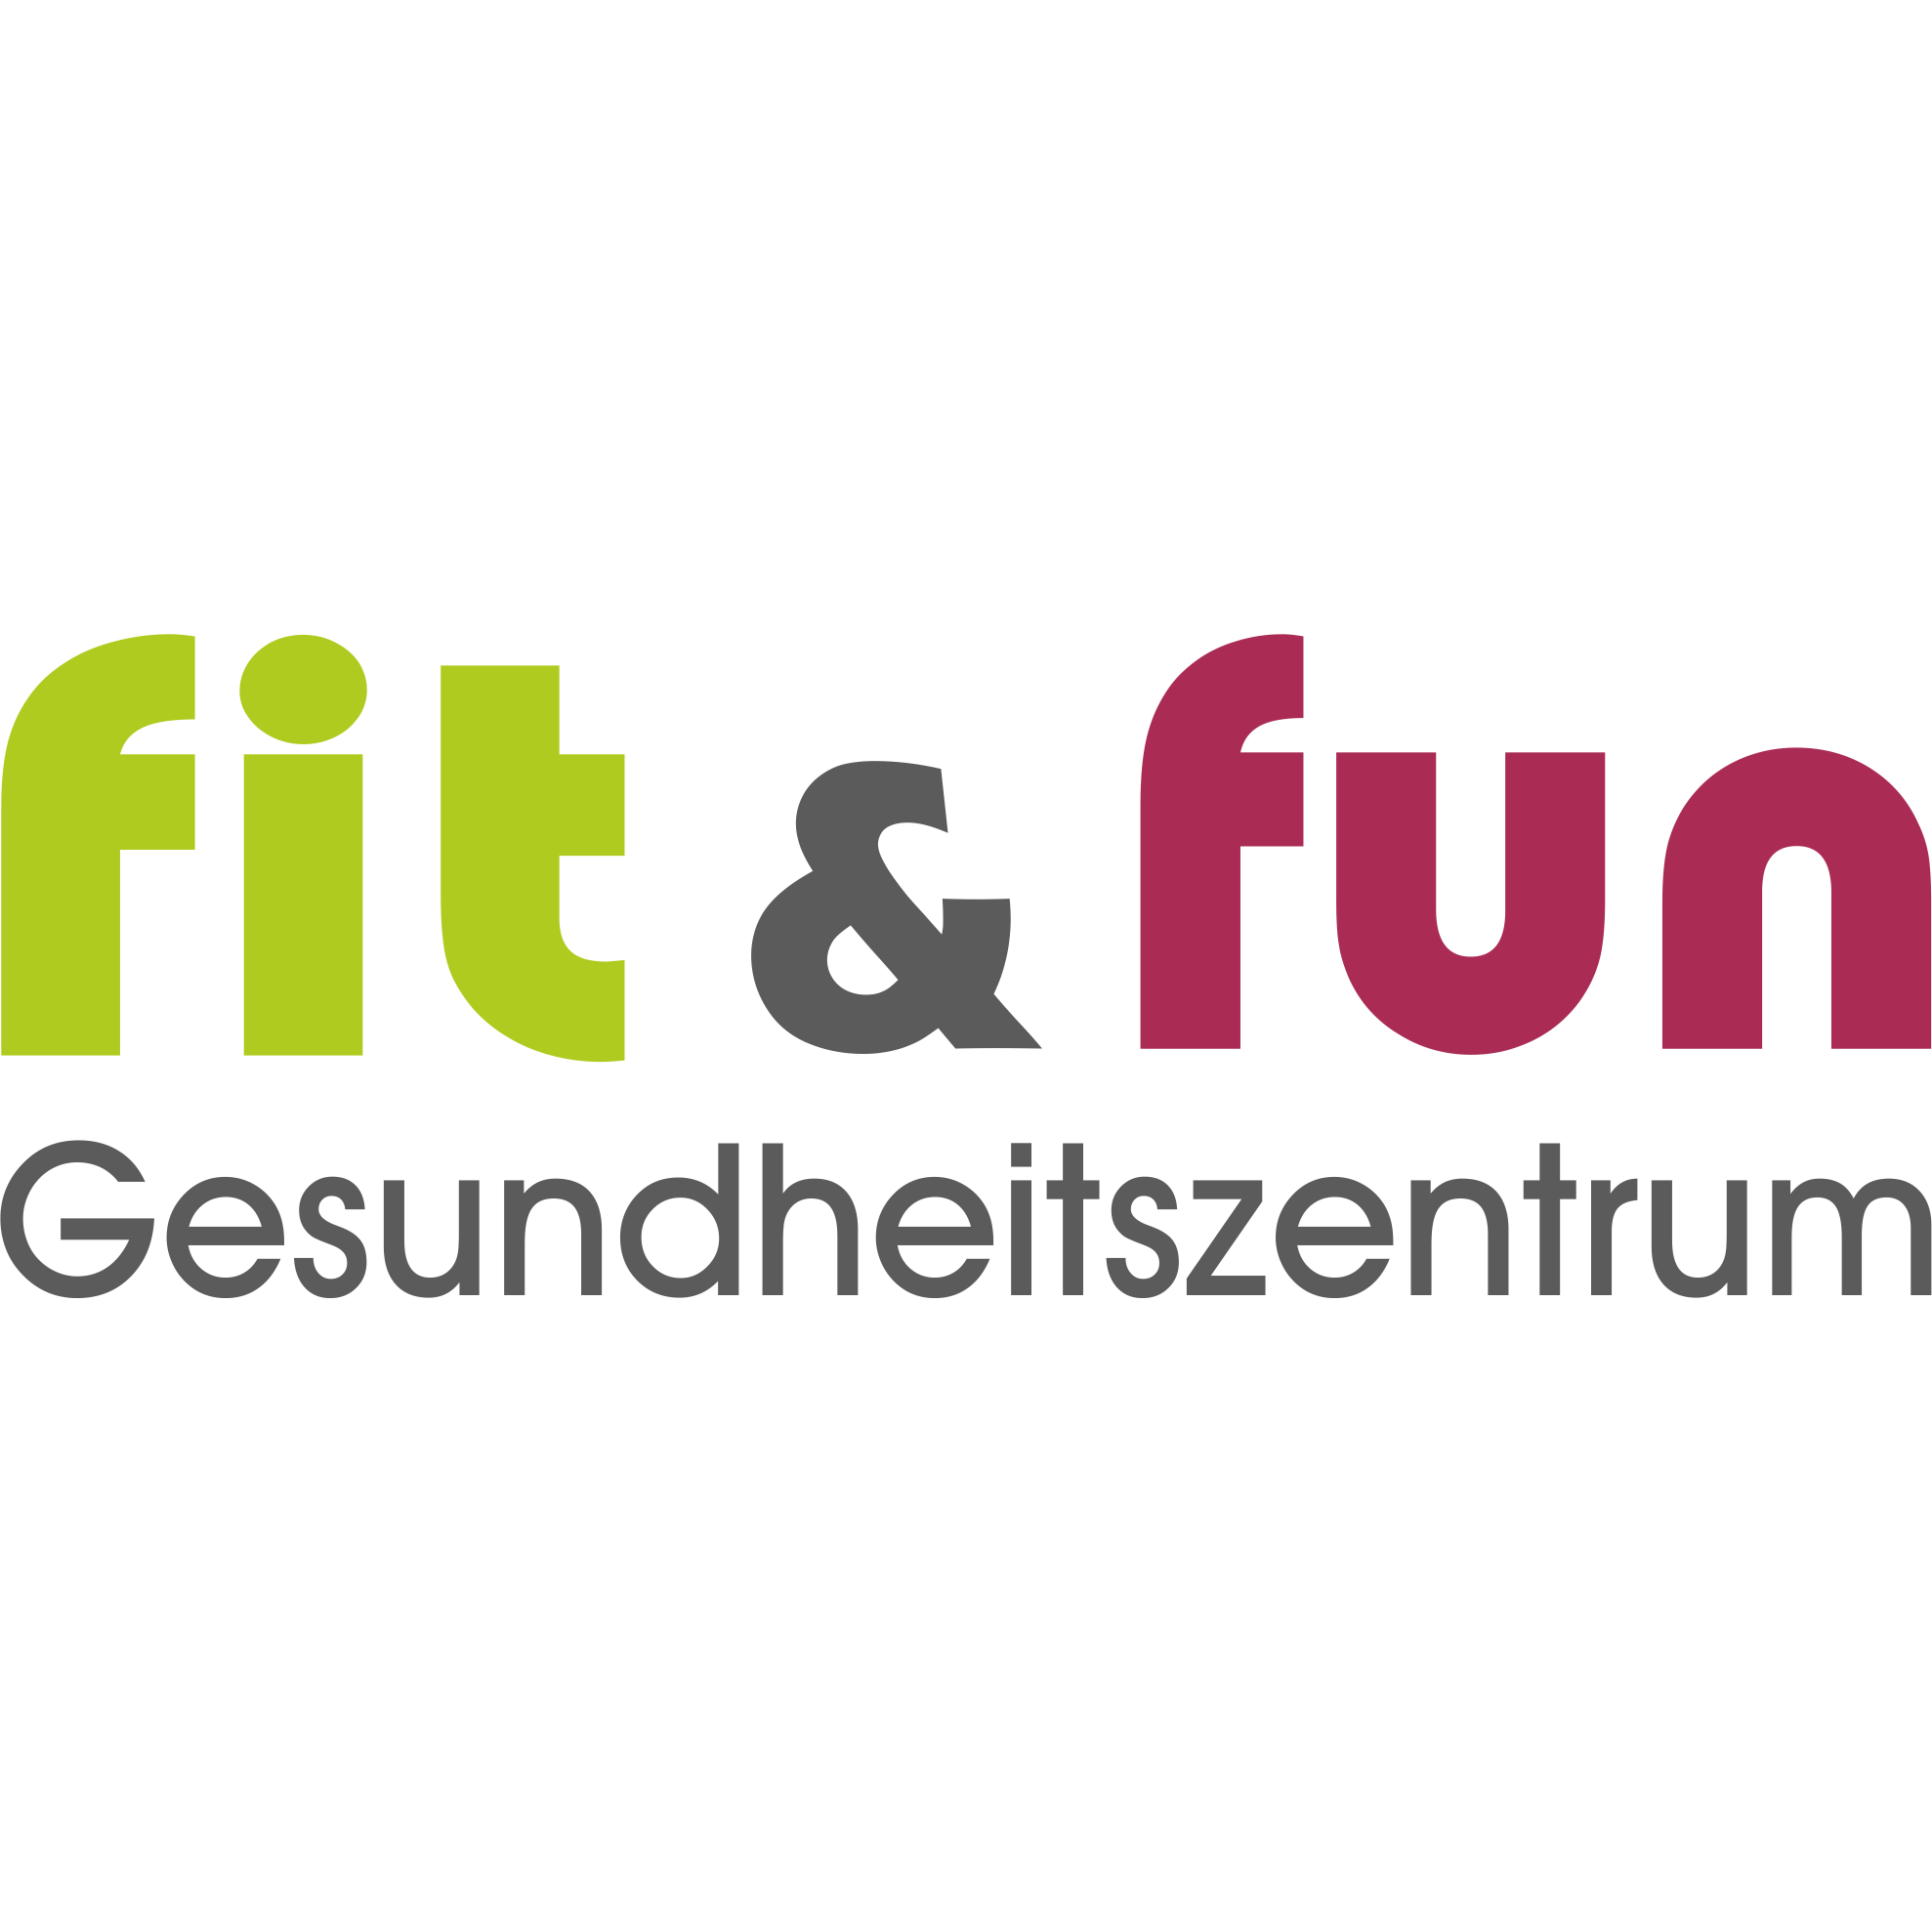 Gesundheitszentrum Fit & Fun Herrieden in Herrieden - Logo